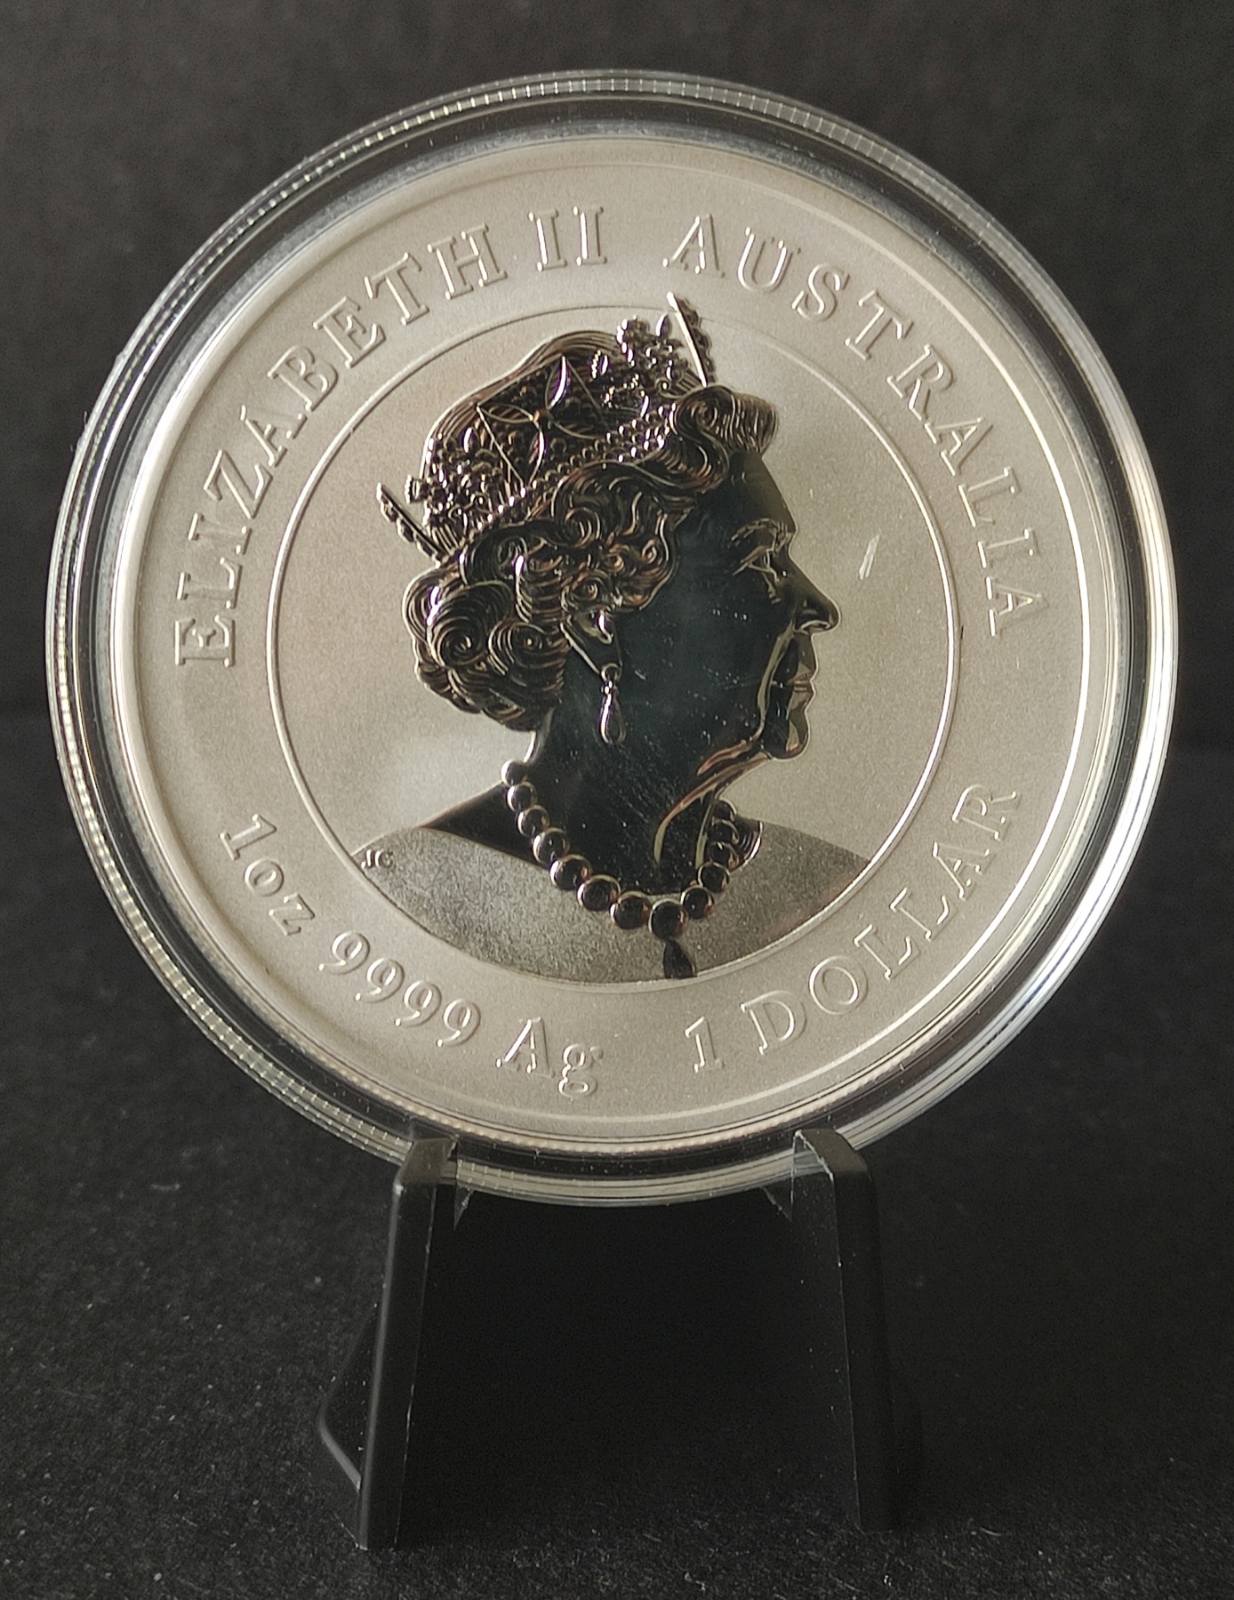 2020 Australia Lunar Mouse (Series III) 1 oz Silver Coin BU in Capsule